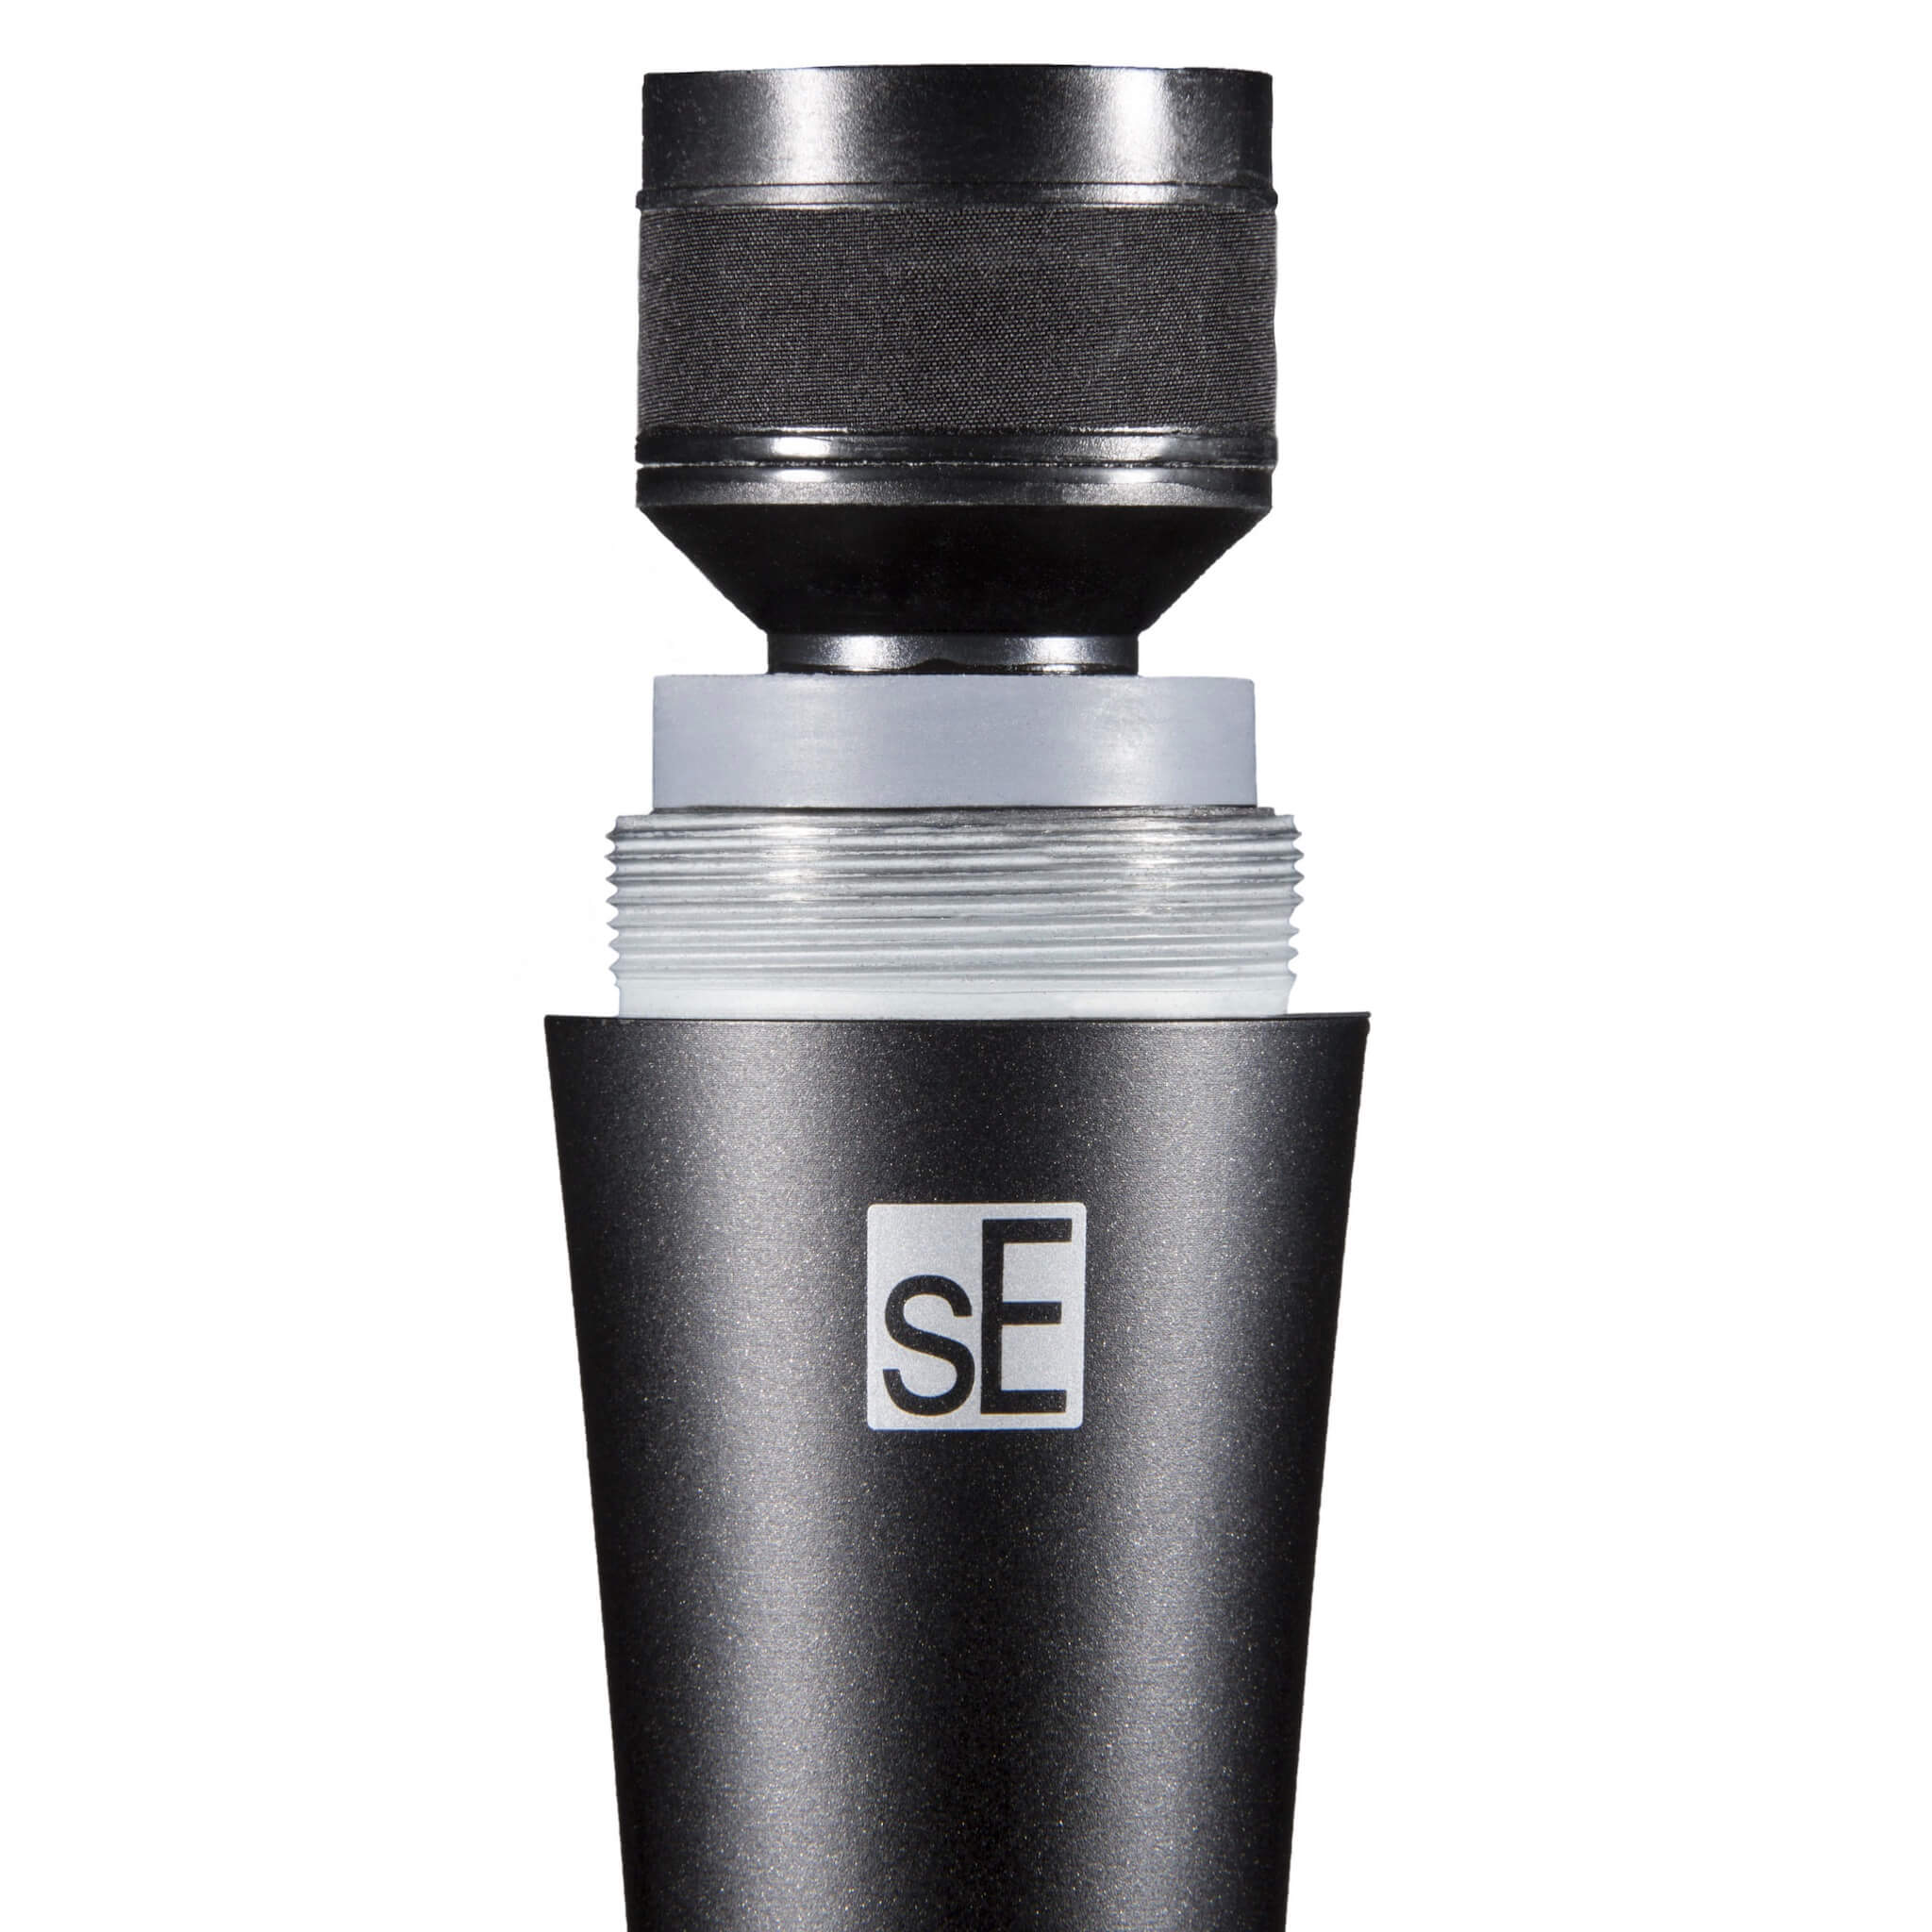 sE Electronics V3 - All-purpose Handheld Cardioid Microphone, capsule